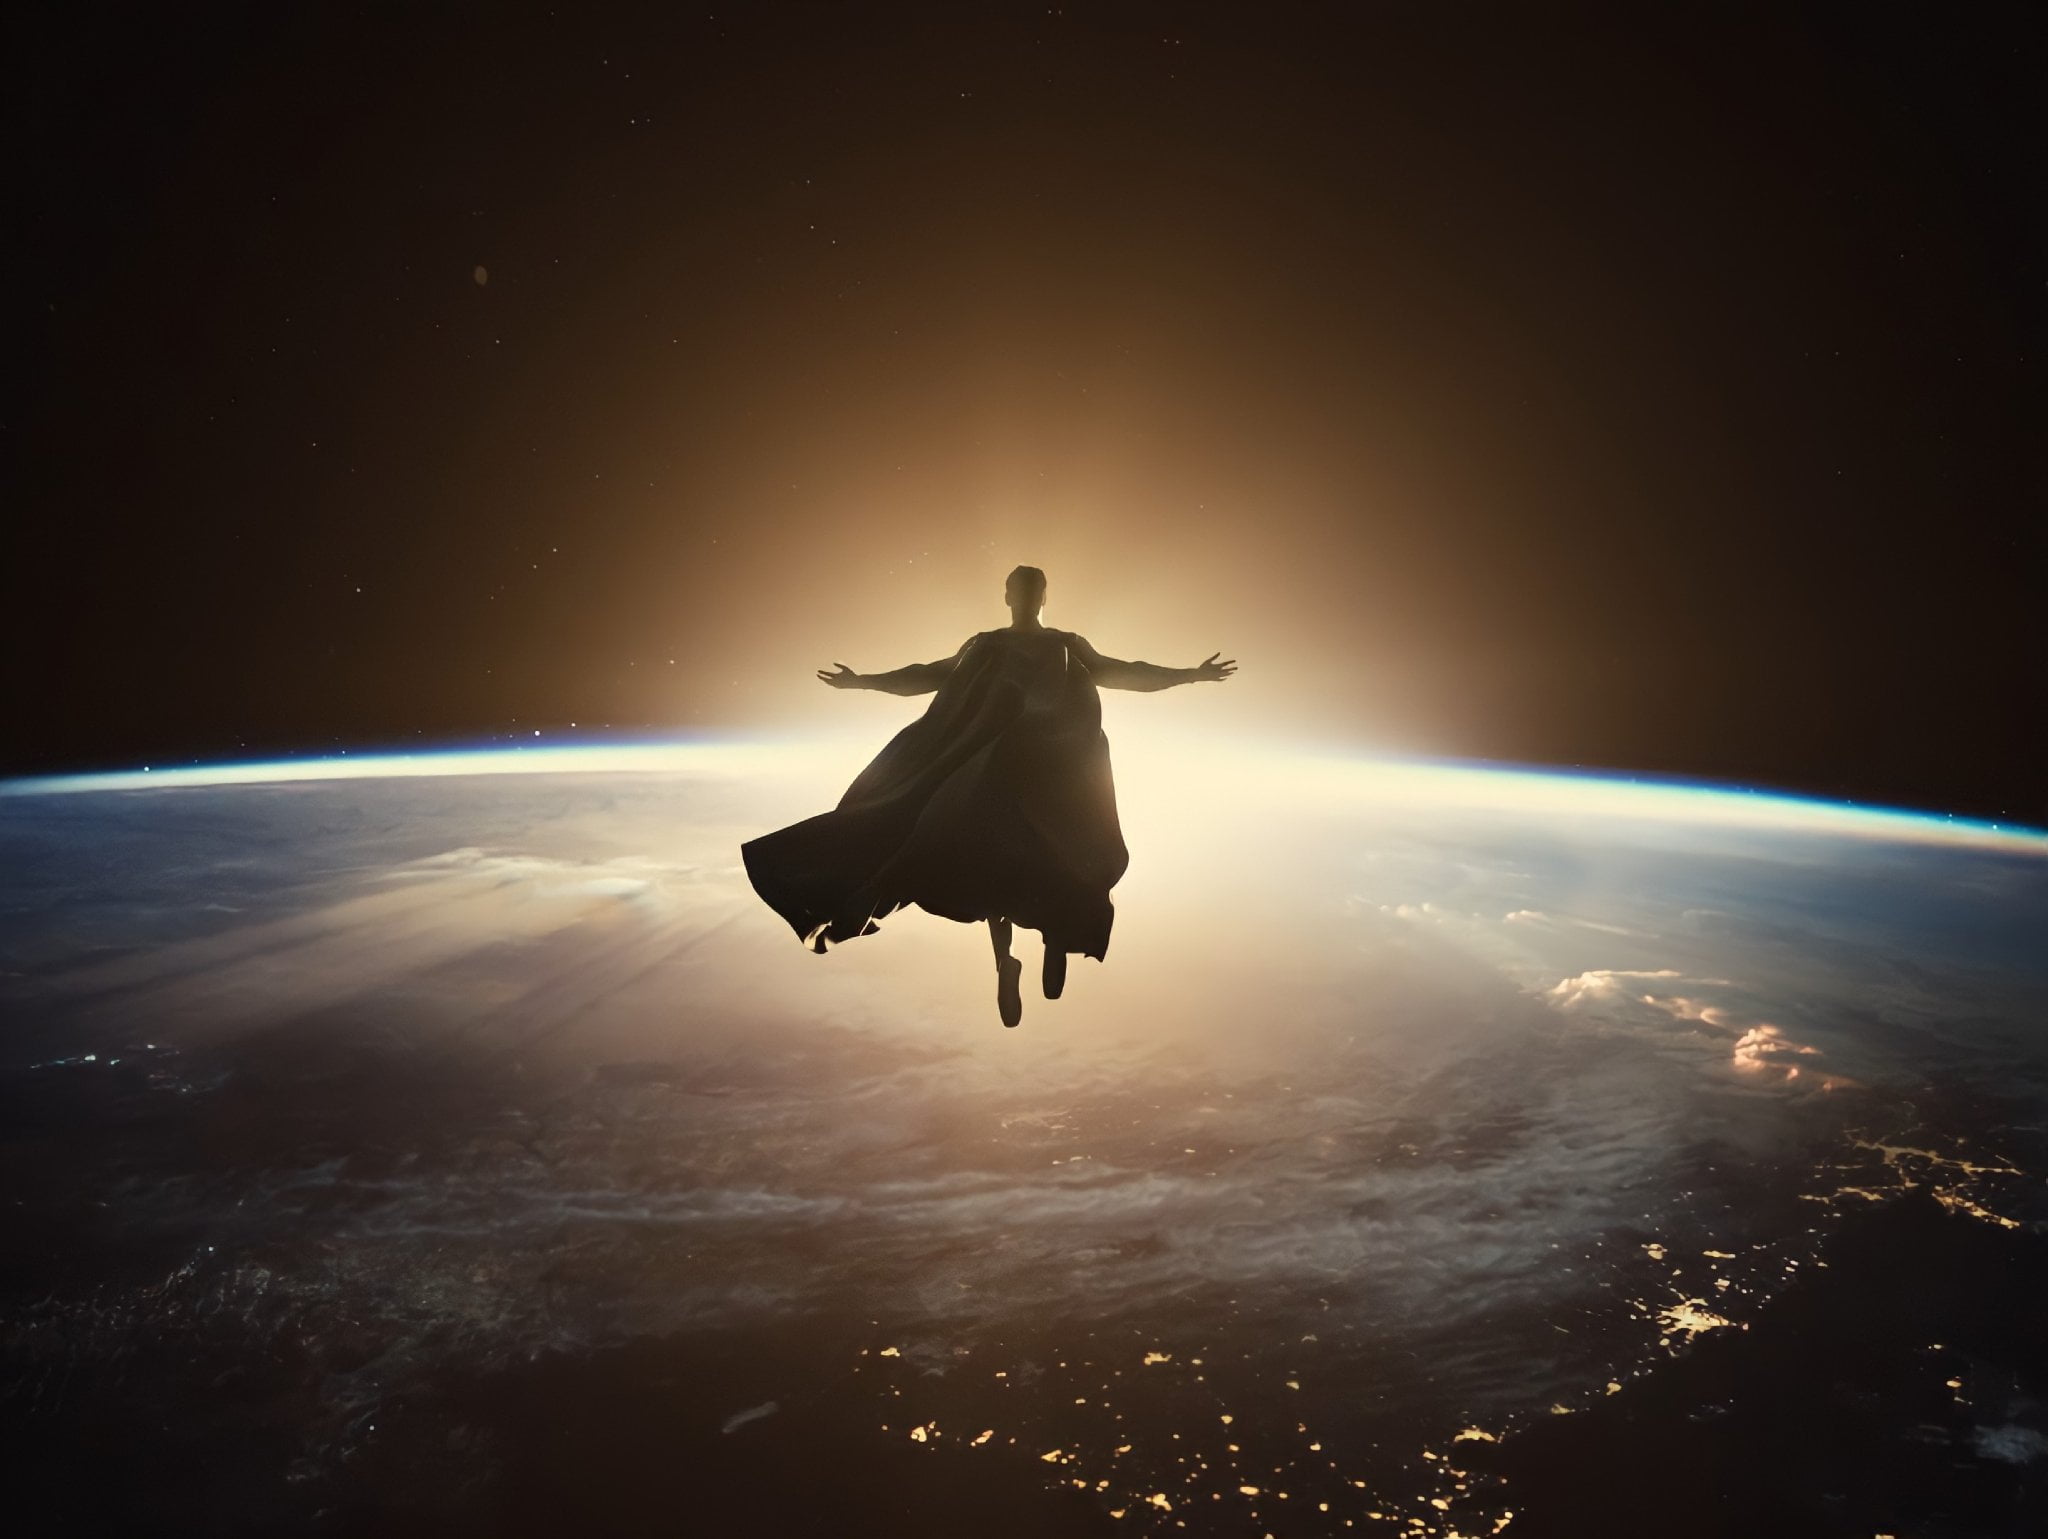 Superman, Justice League (2017), Zack Snyder's Justice League